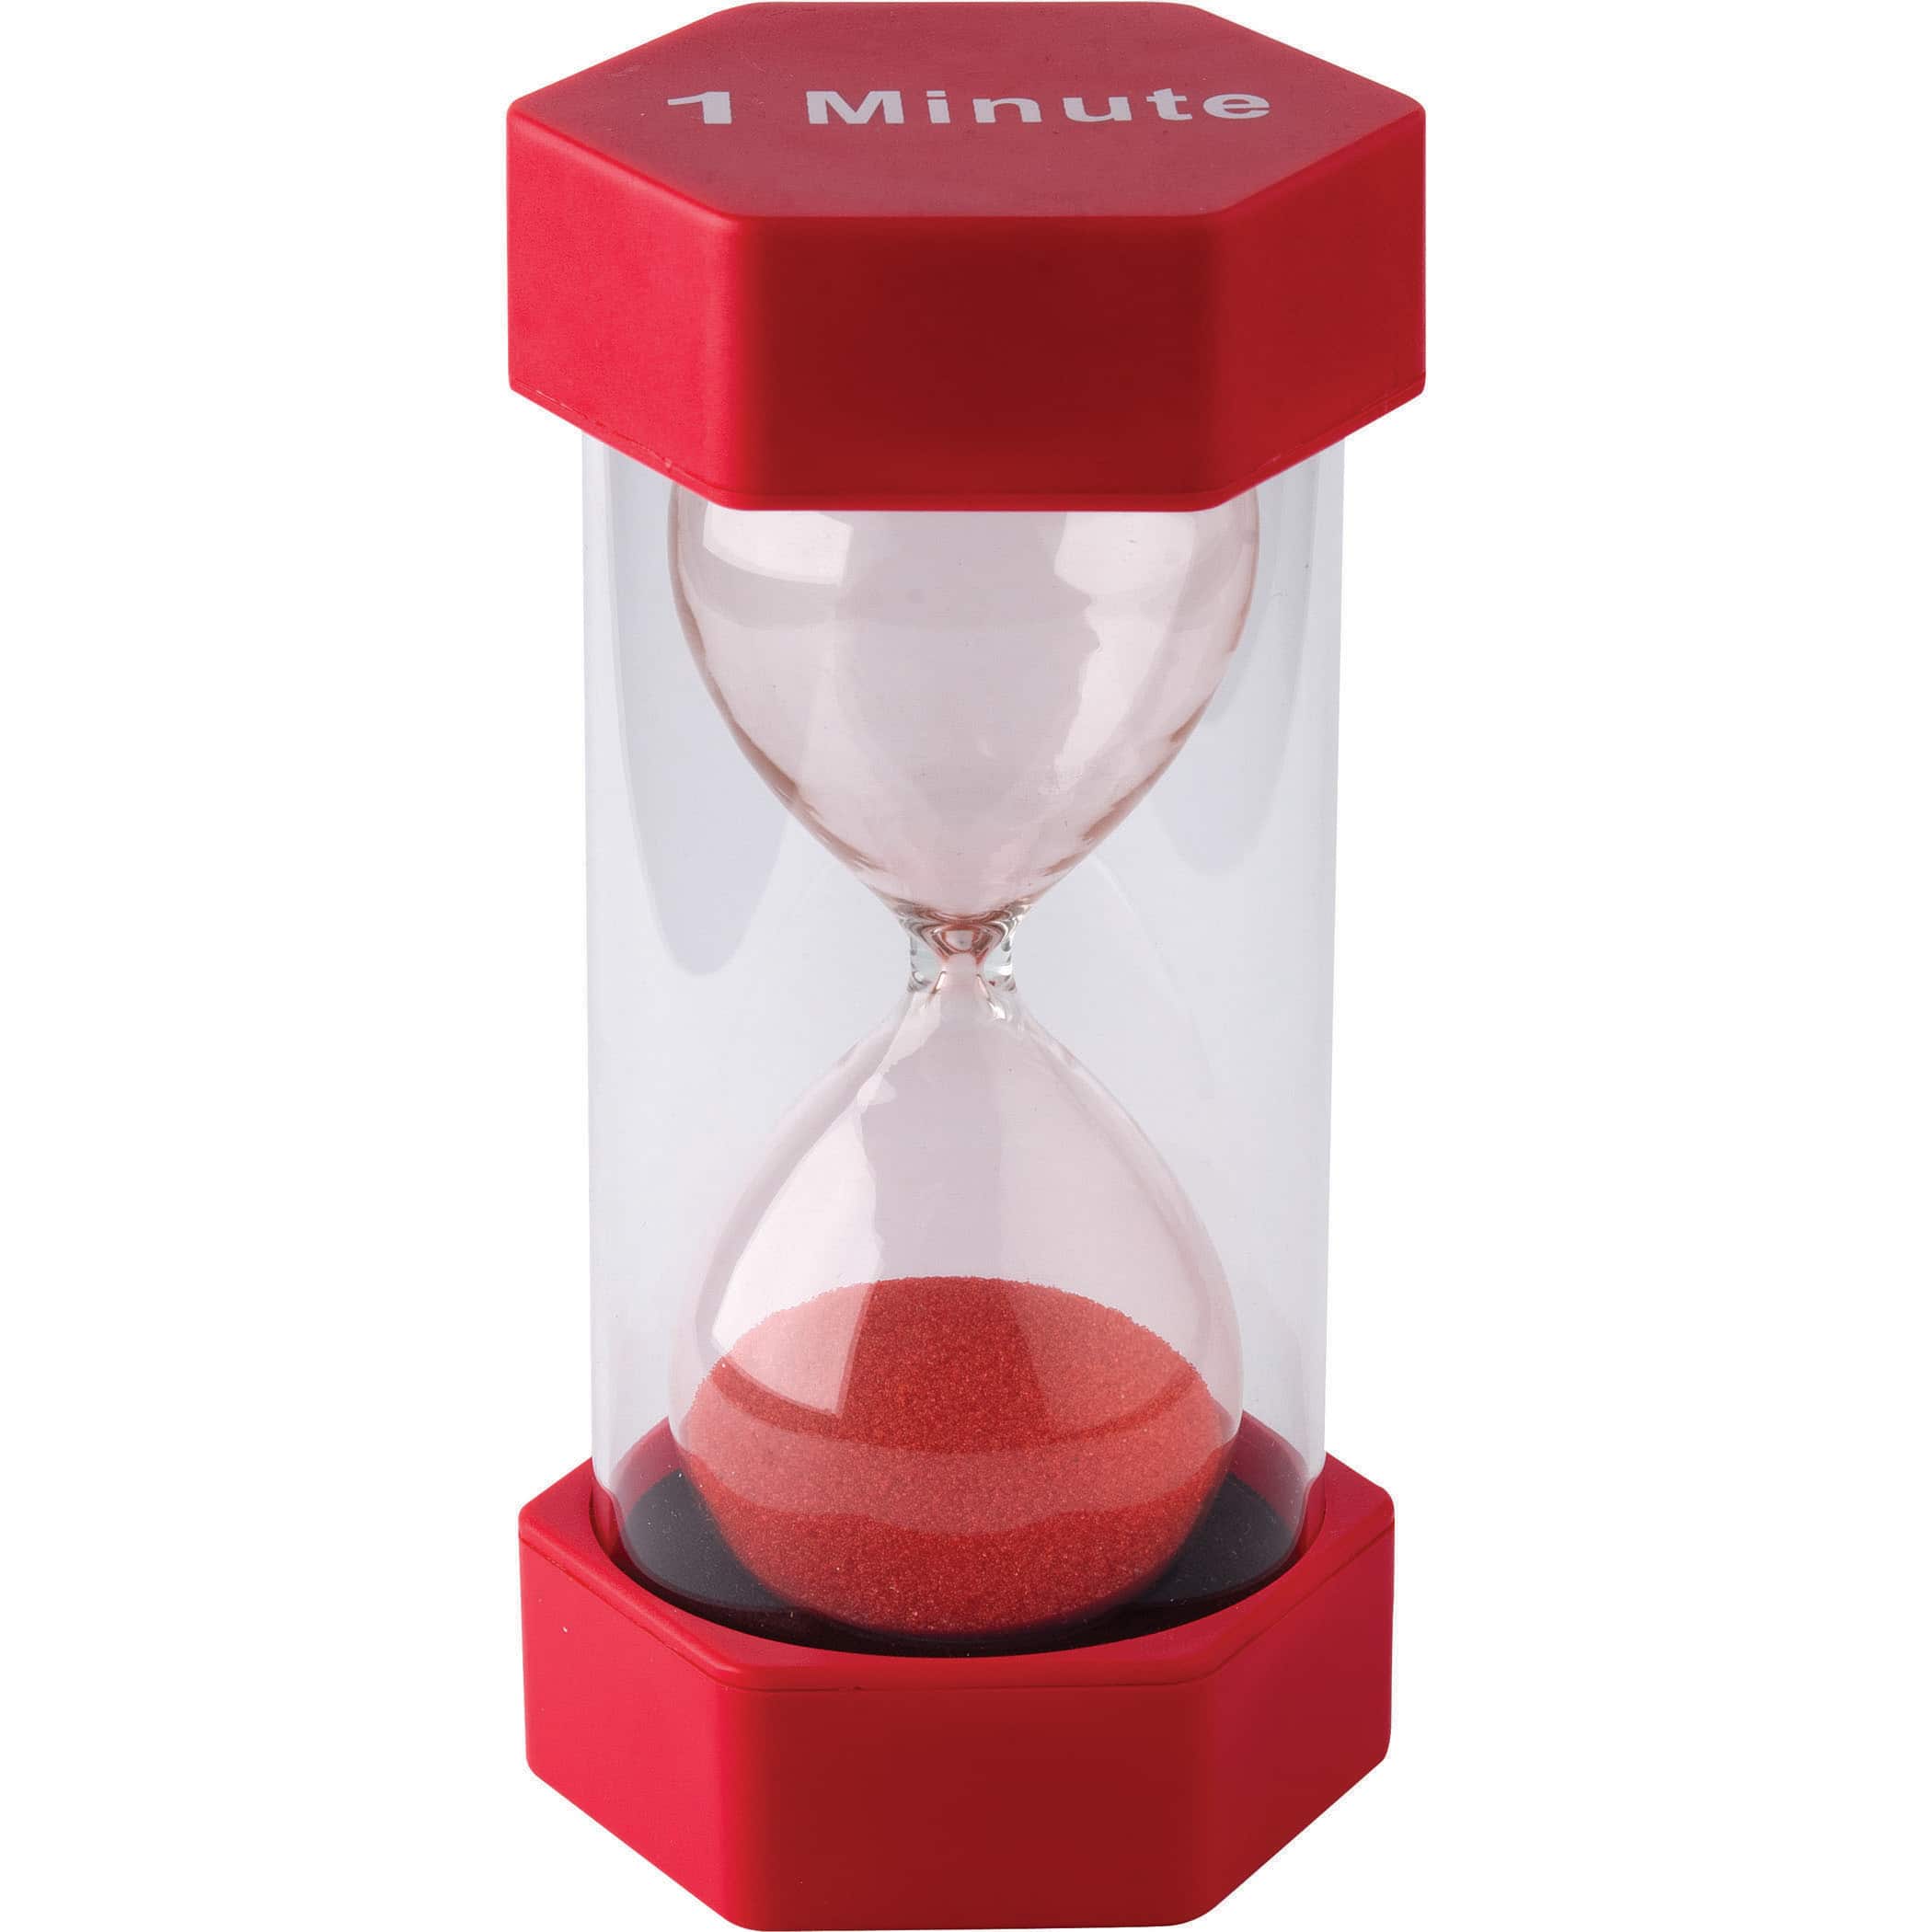 one minute hourglass